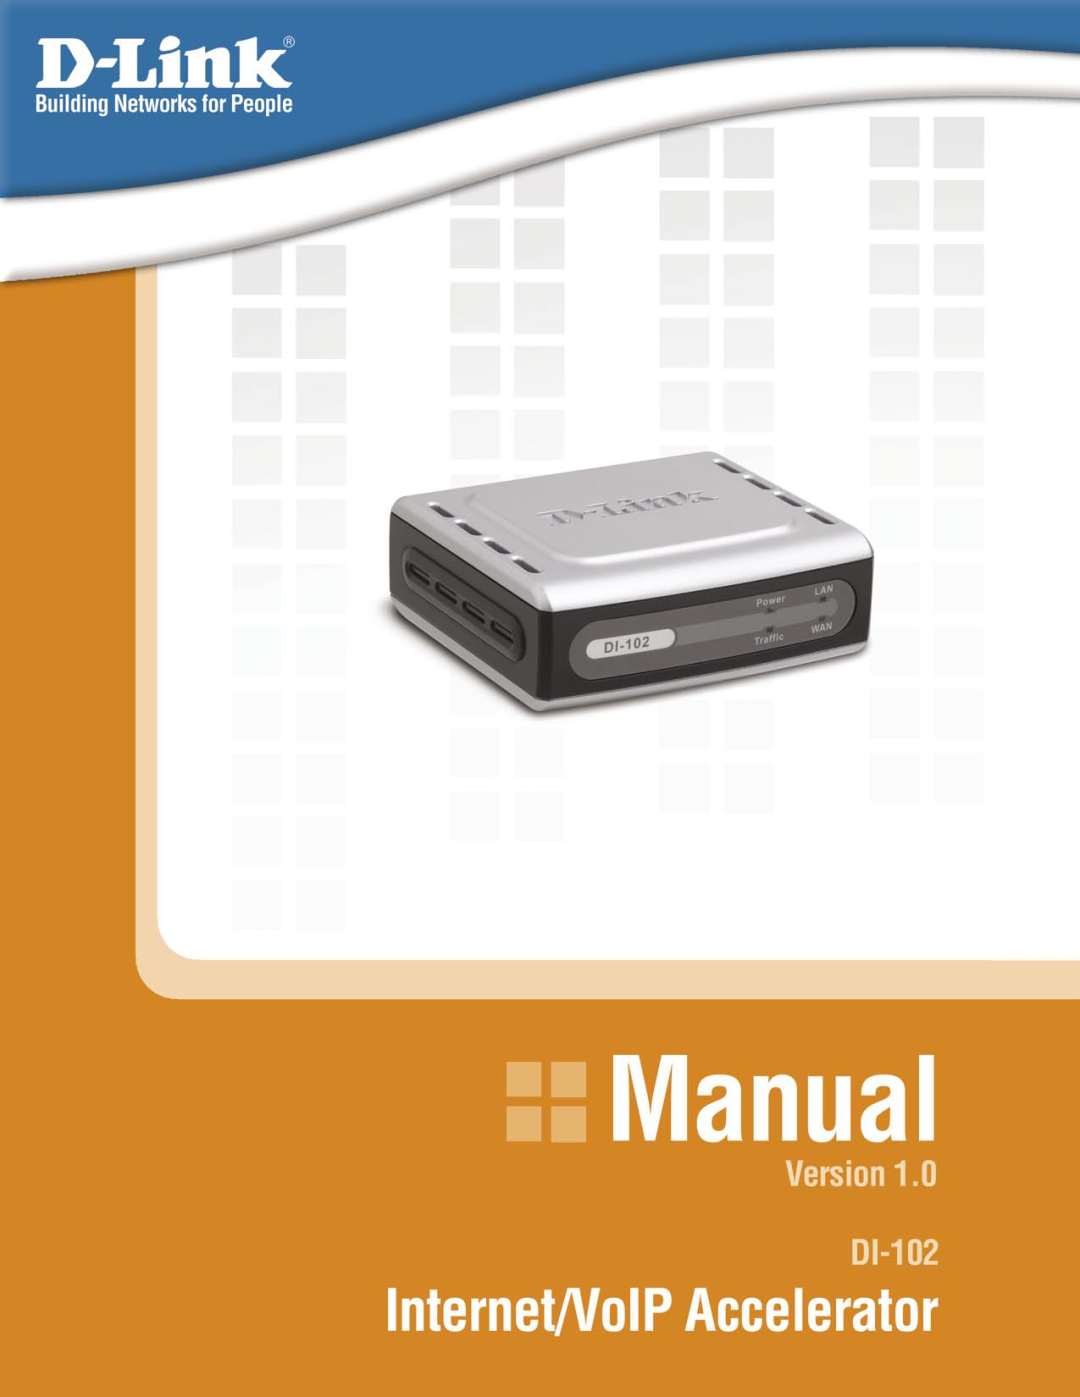 D-Link Internet/VoIP Accelerator, DI-102 manual 